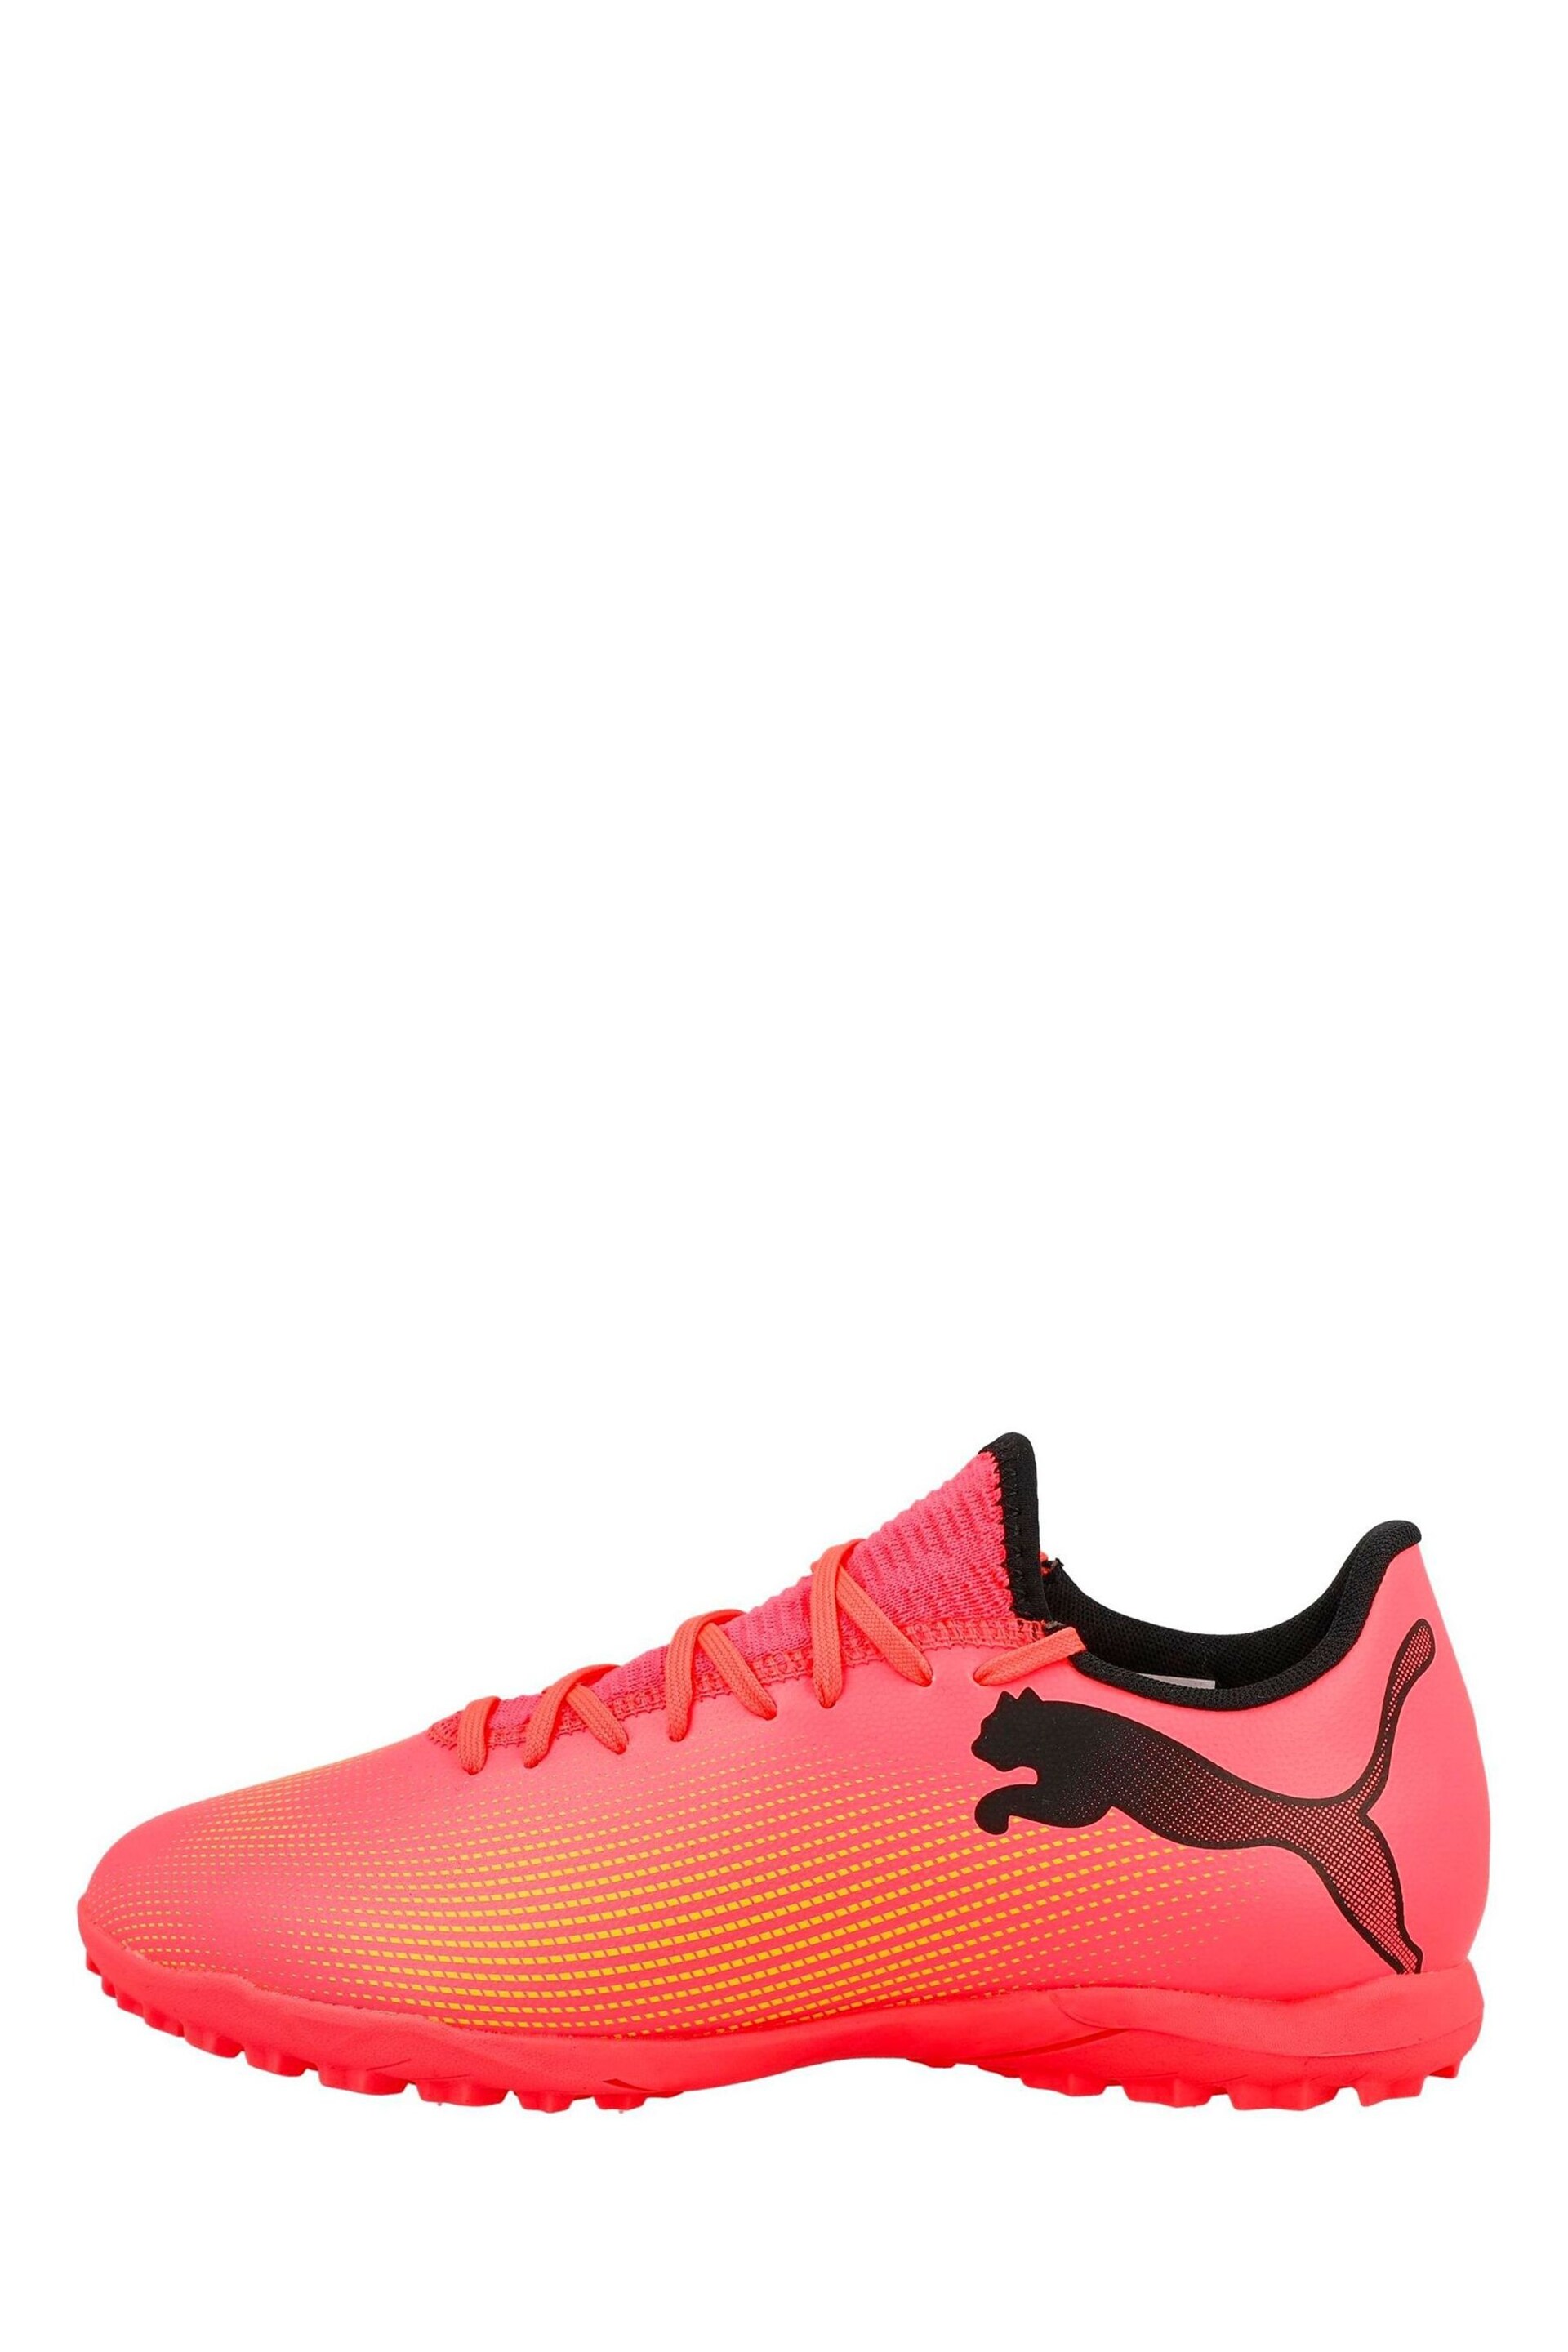 Puma Pink Mens Future 7 Play TT Football Boots - Image 2 of 6